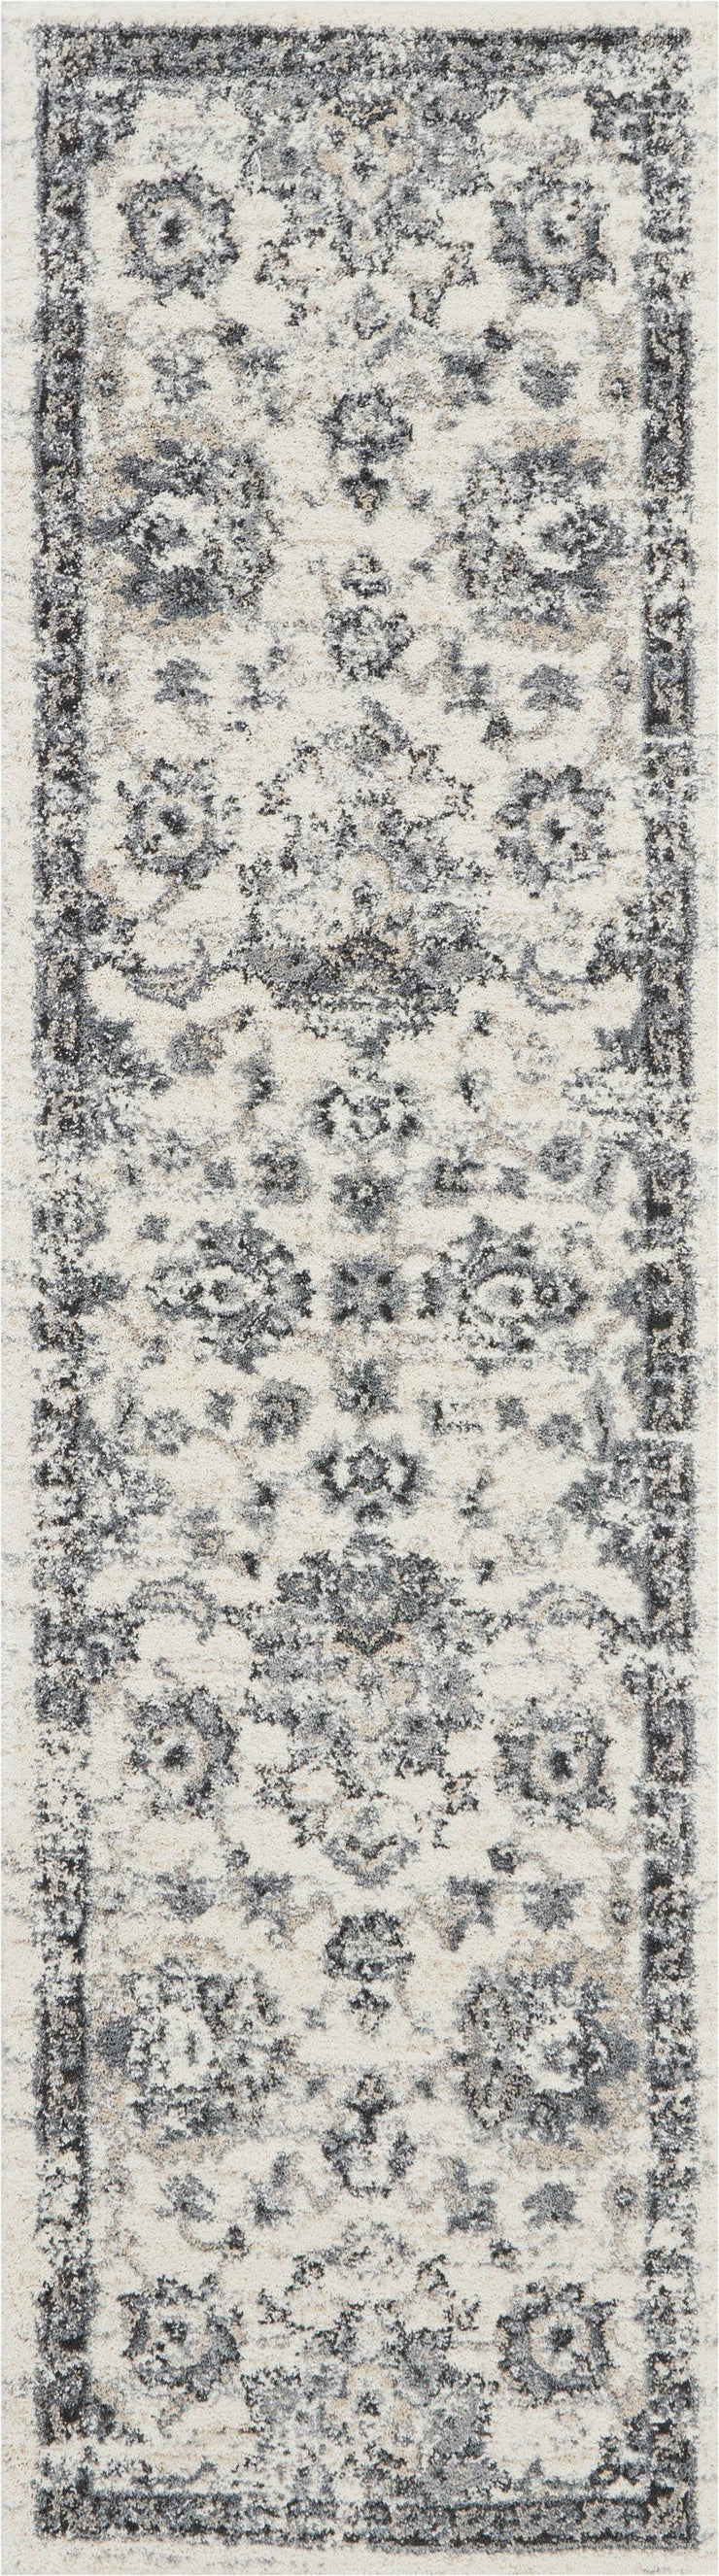 fusion cream grey rug by nourison 99446425164 redo 2